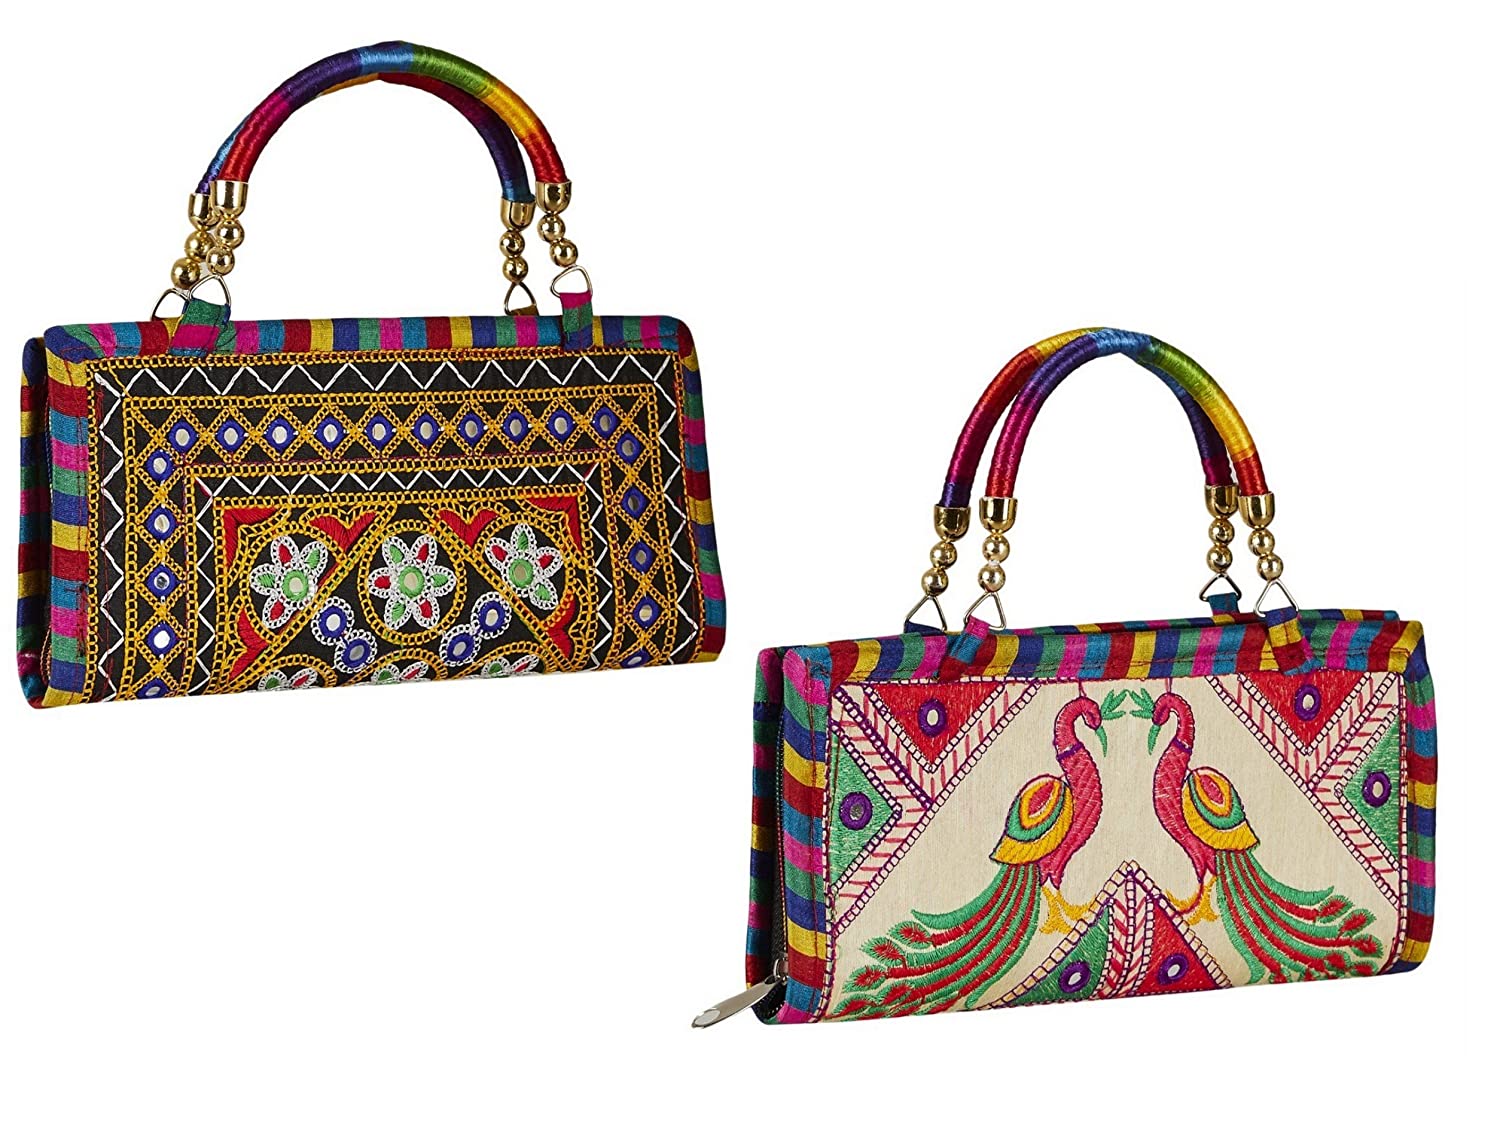 Mammon Women's Handbag With Sling Bag & Clutch (Set of 3)  (3LR-bib-Green-Tie_Green) | Bags, Stylish handbags, Women handbags